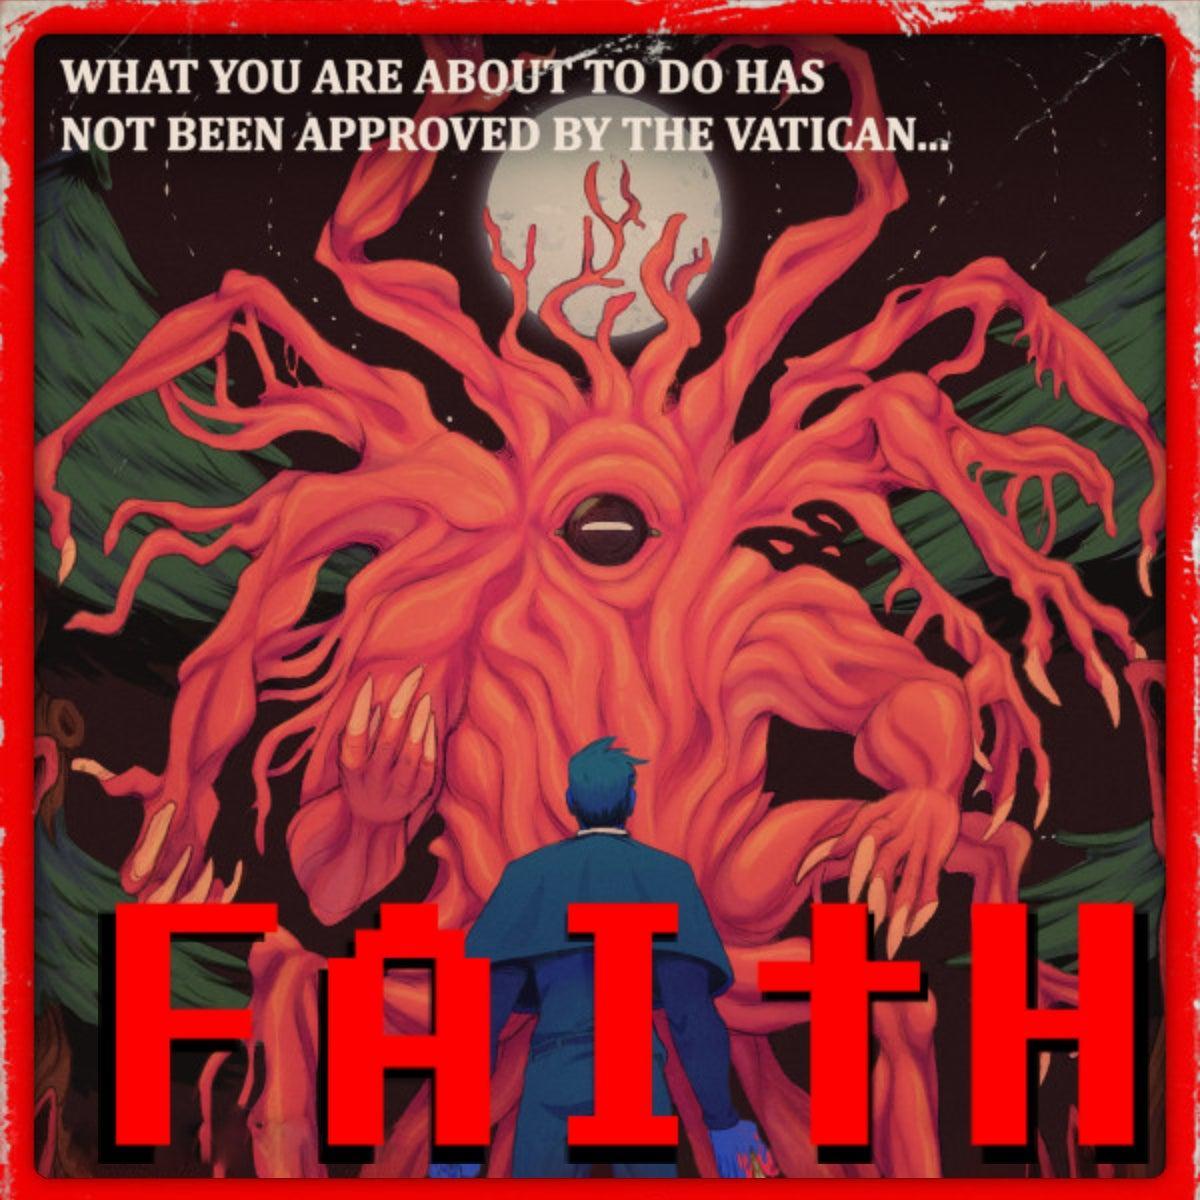 faith-the-unholy-trinity-cloud-gaming-catalogue